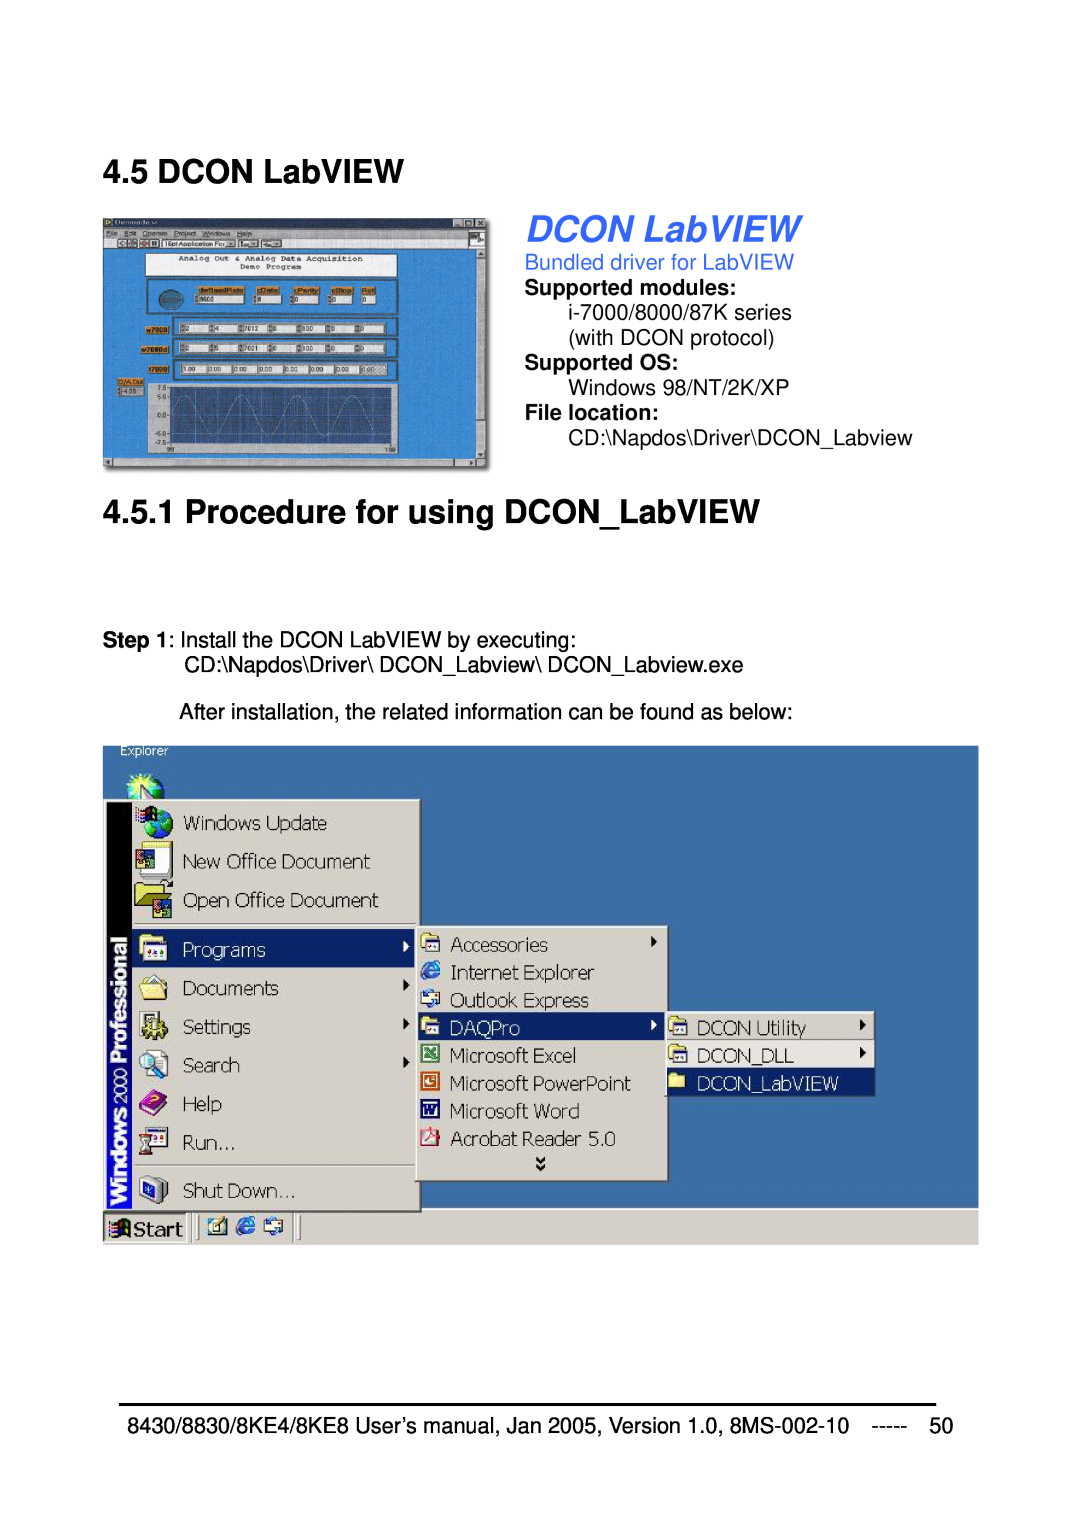 ICP DAS USA 8430, 8KE8, 8KE4, 8830 user manual DCON LabVIEW, Procedure for using DCONLabVIEW, Bundled driver for LabVIEW 